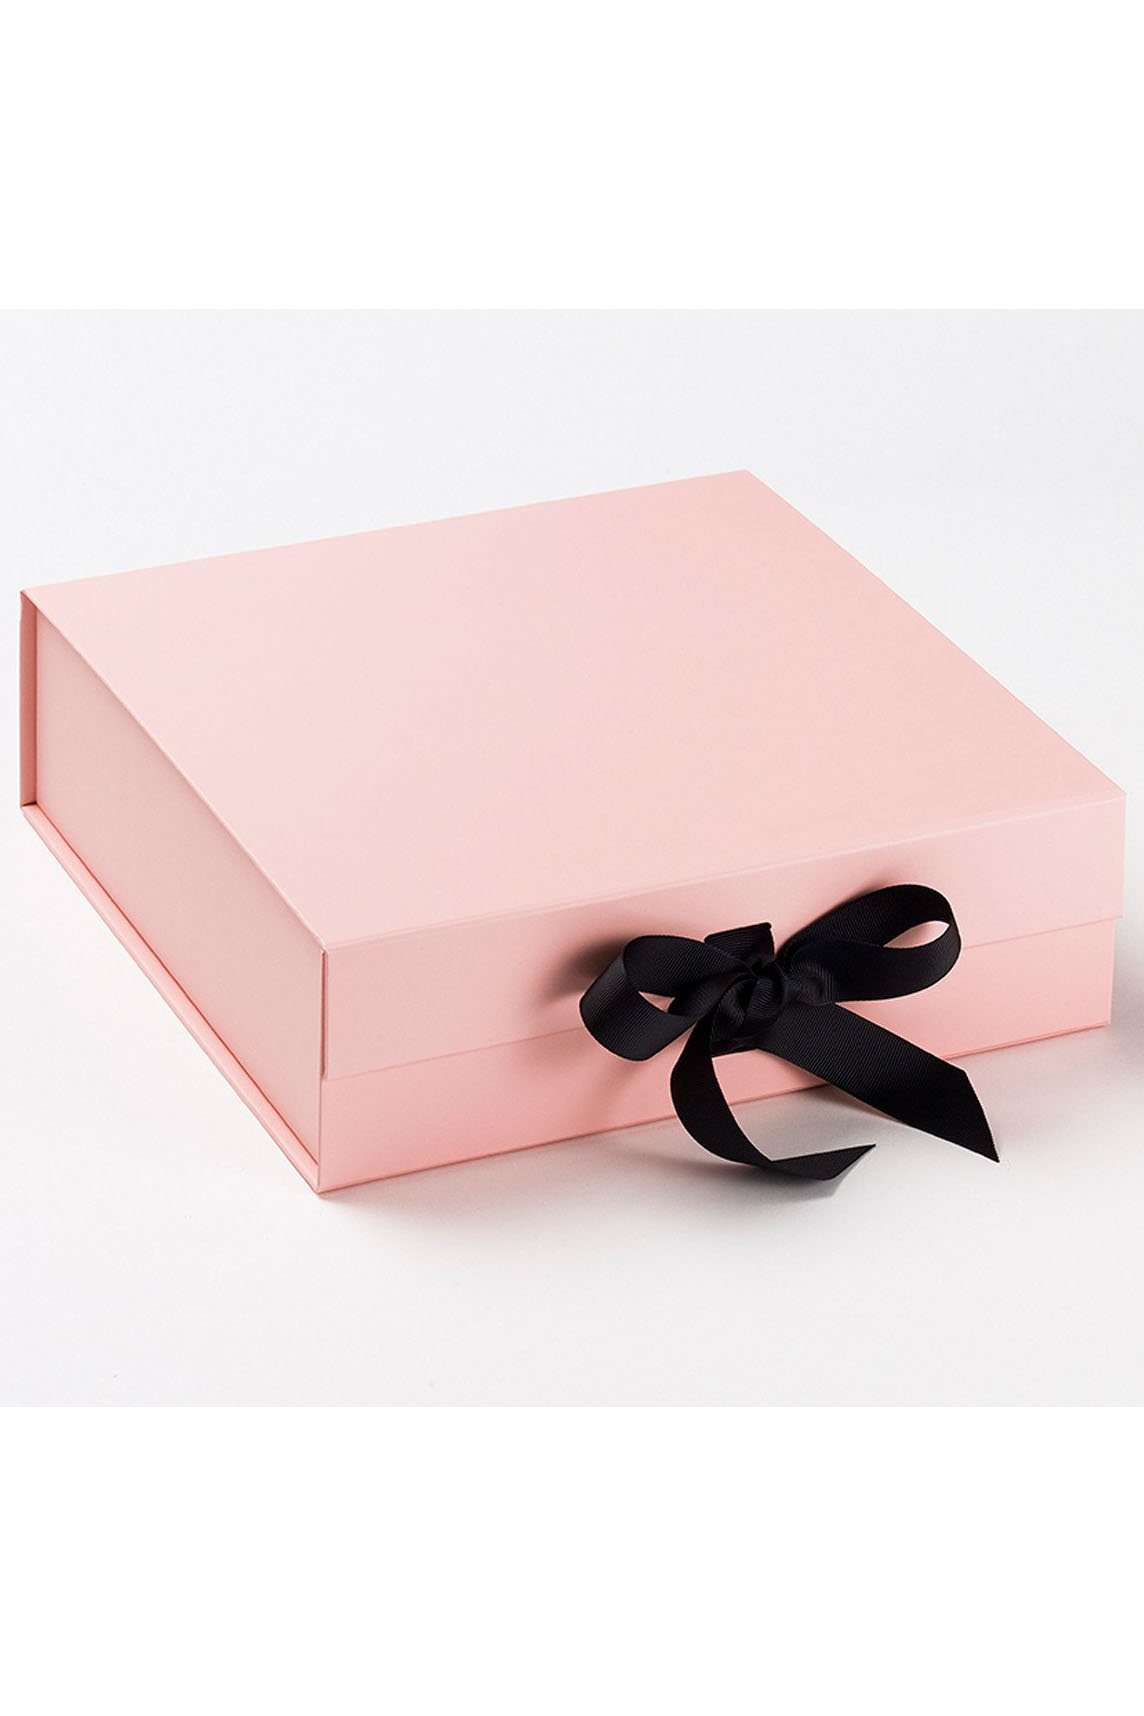 Gift Wrap – Lounge Underwear, Black Gift Wrap 